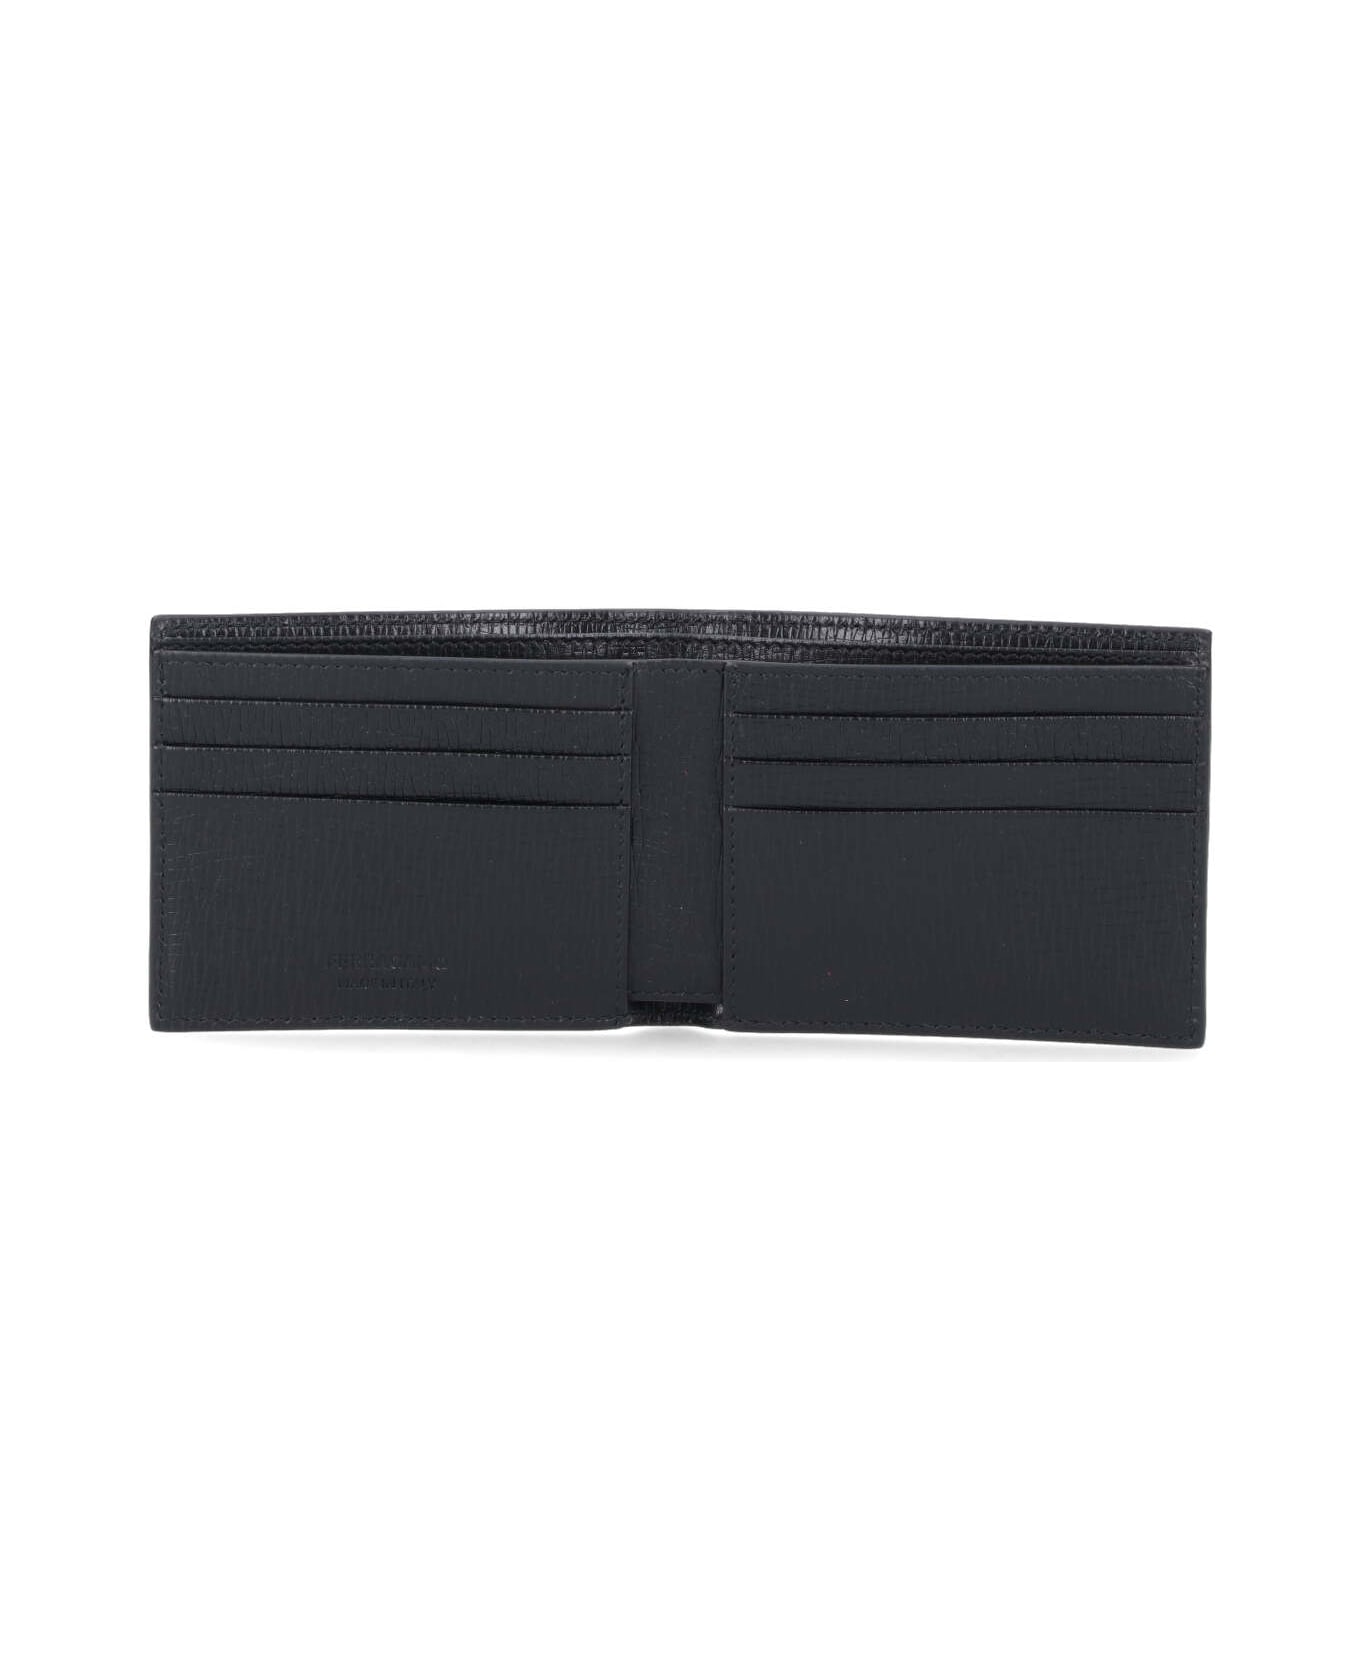 Ferragamo Bi-fold Wallets - Black   財布